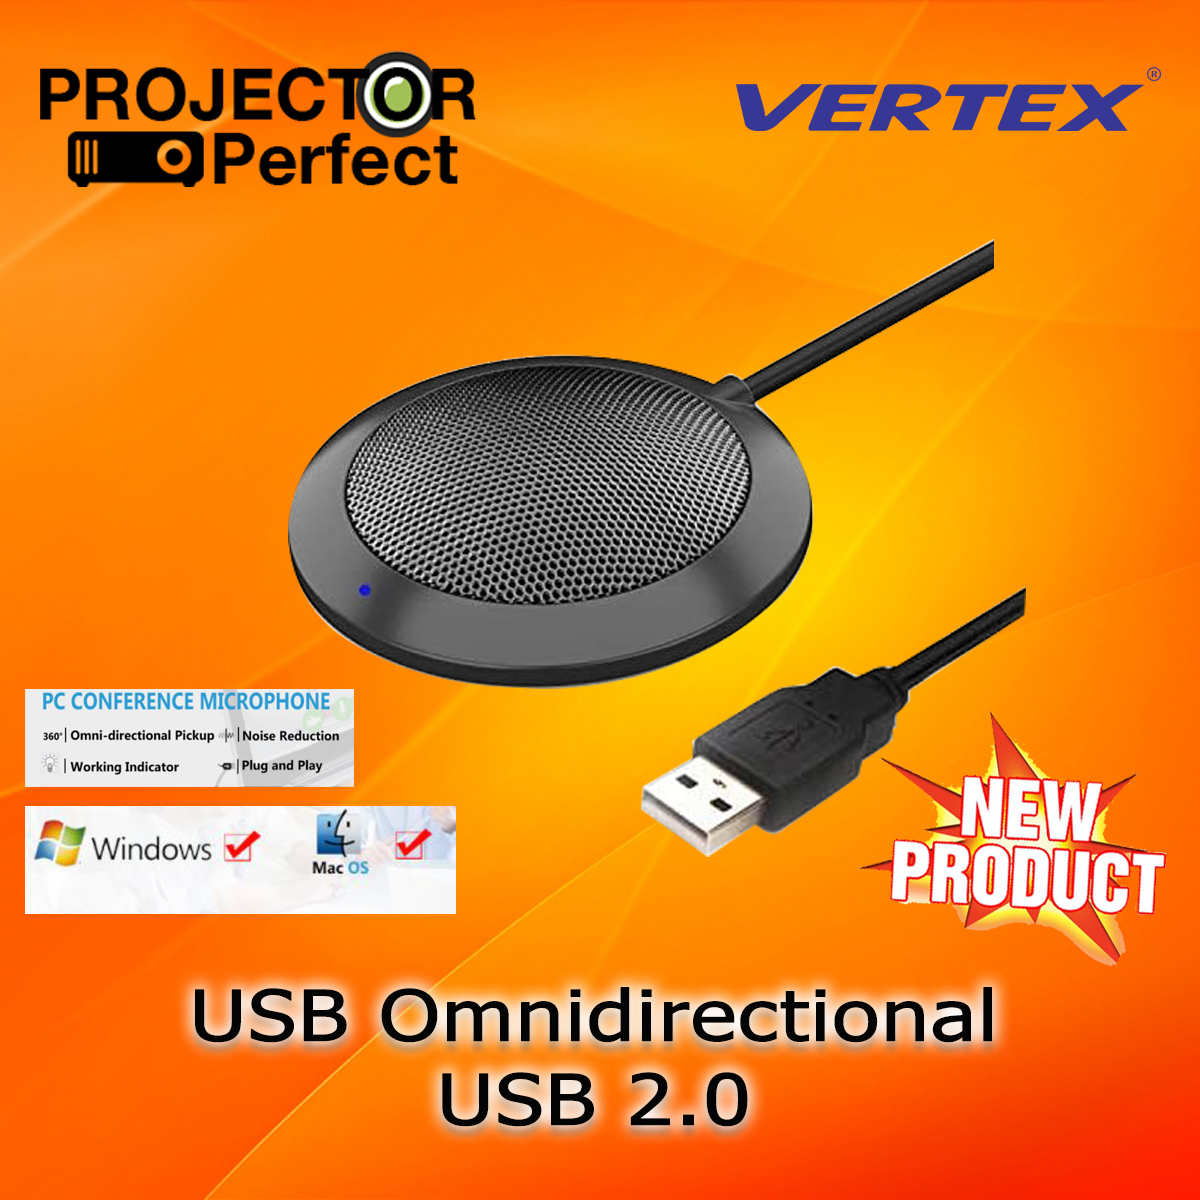 VERTEX USB Omnidirectional Microphone USB 2.0 ไมโครโฟนยูเอสบีรองรับเสียงได้ 360 องศา